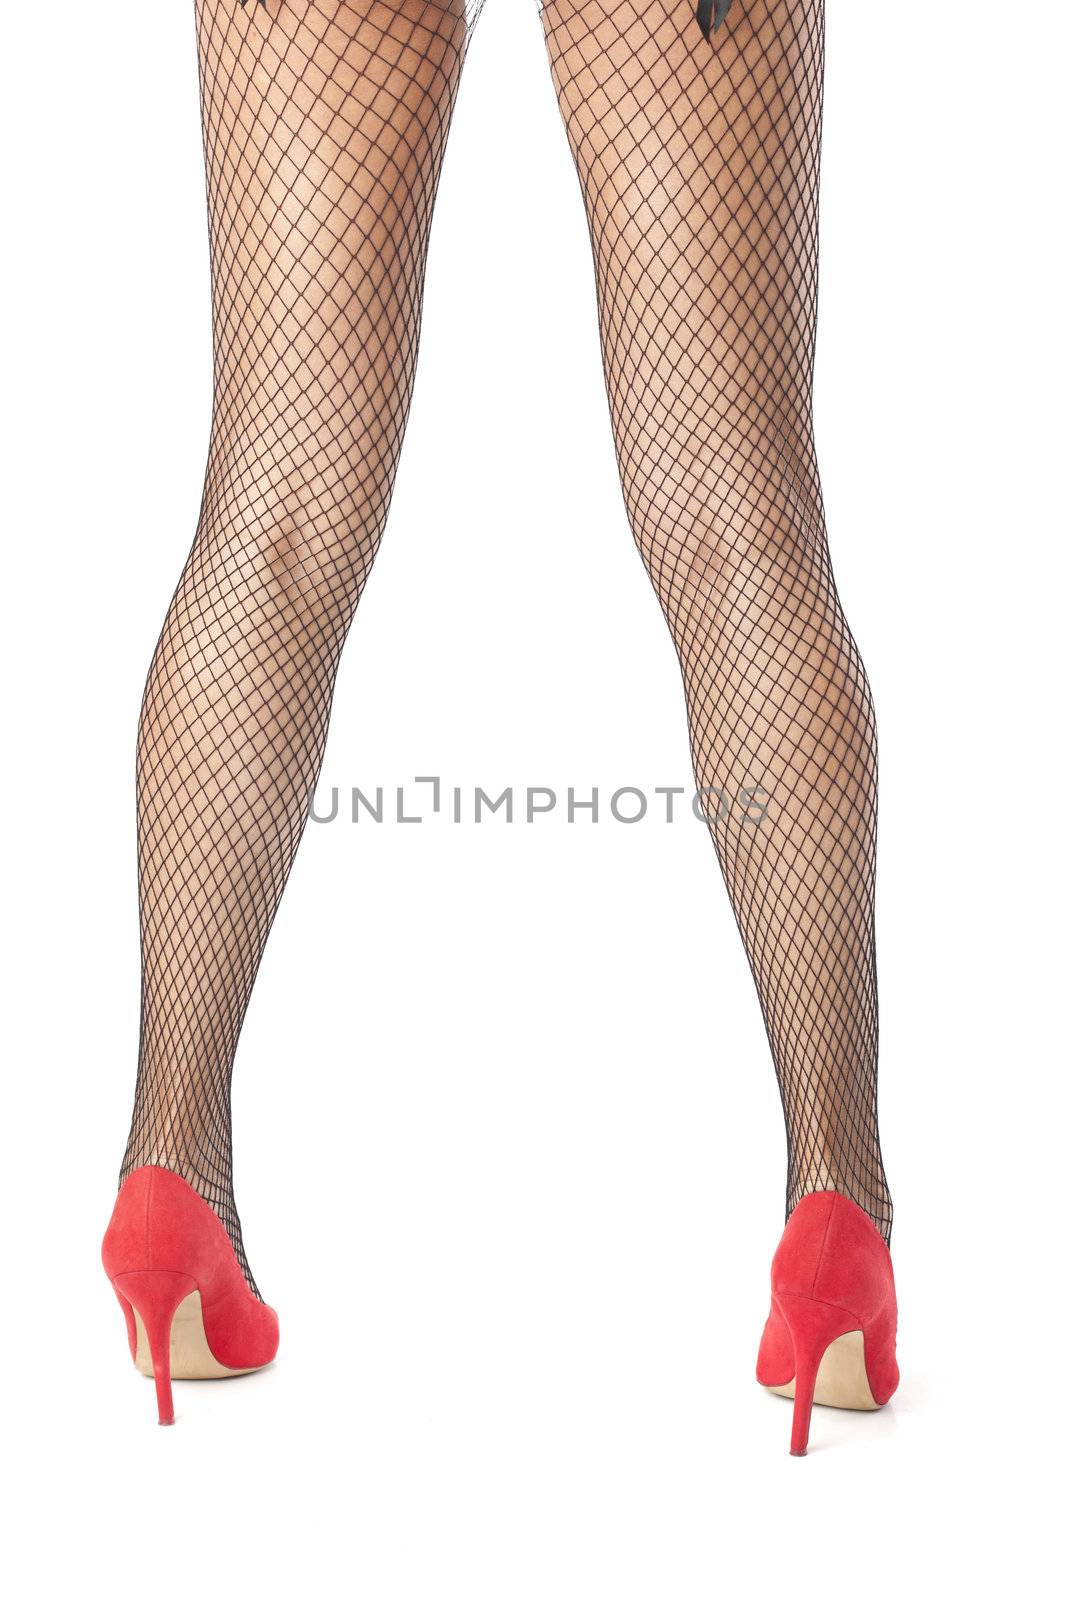 Sexy Woman legs in fishnet stocking posing